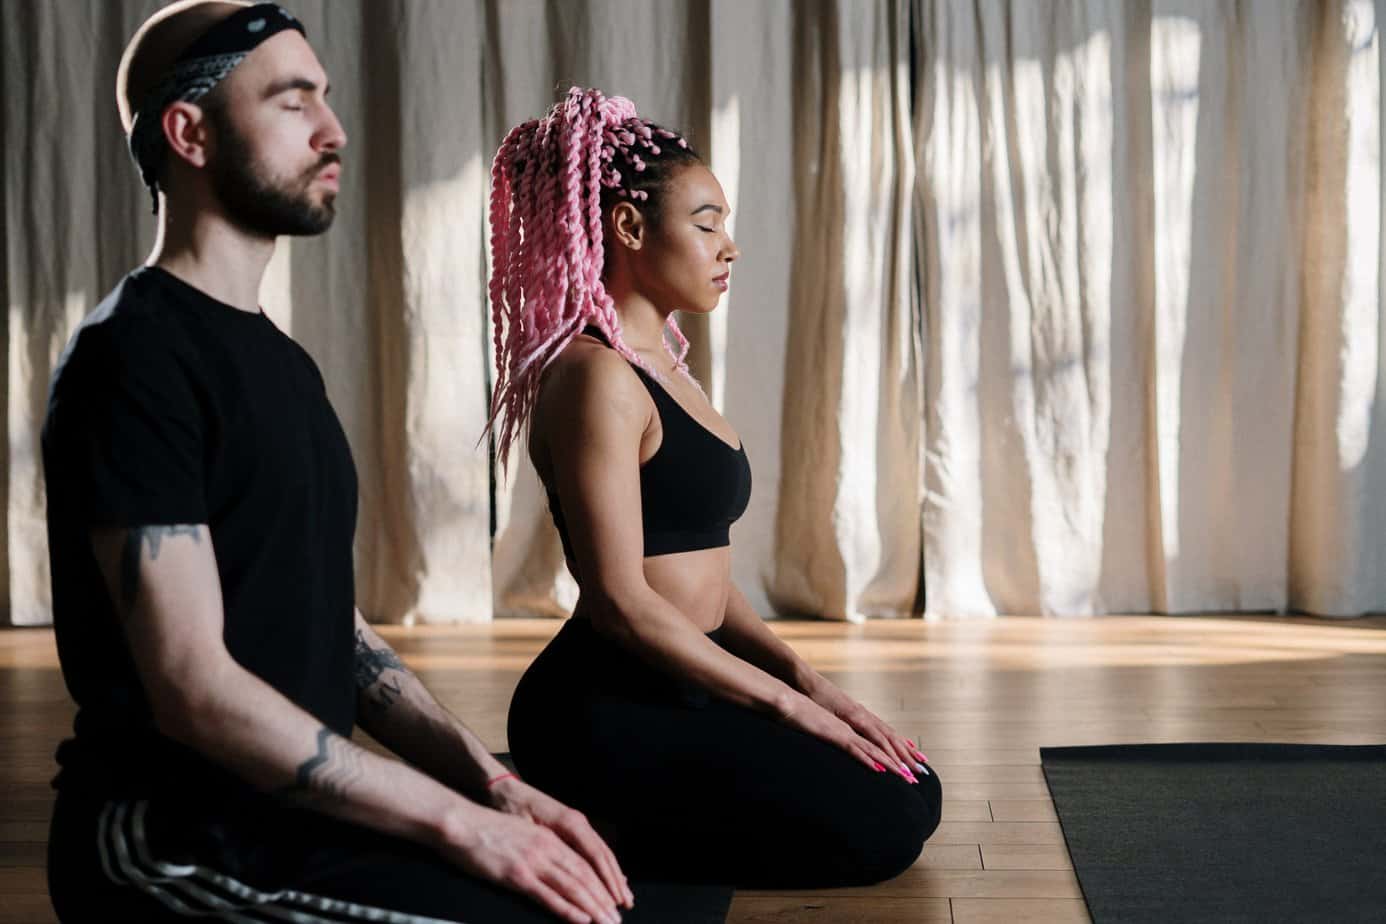 is yoga a form of meditation?